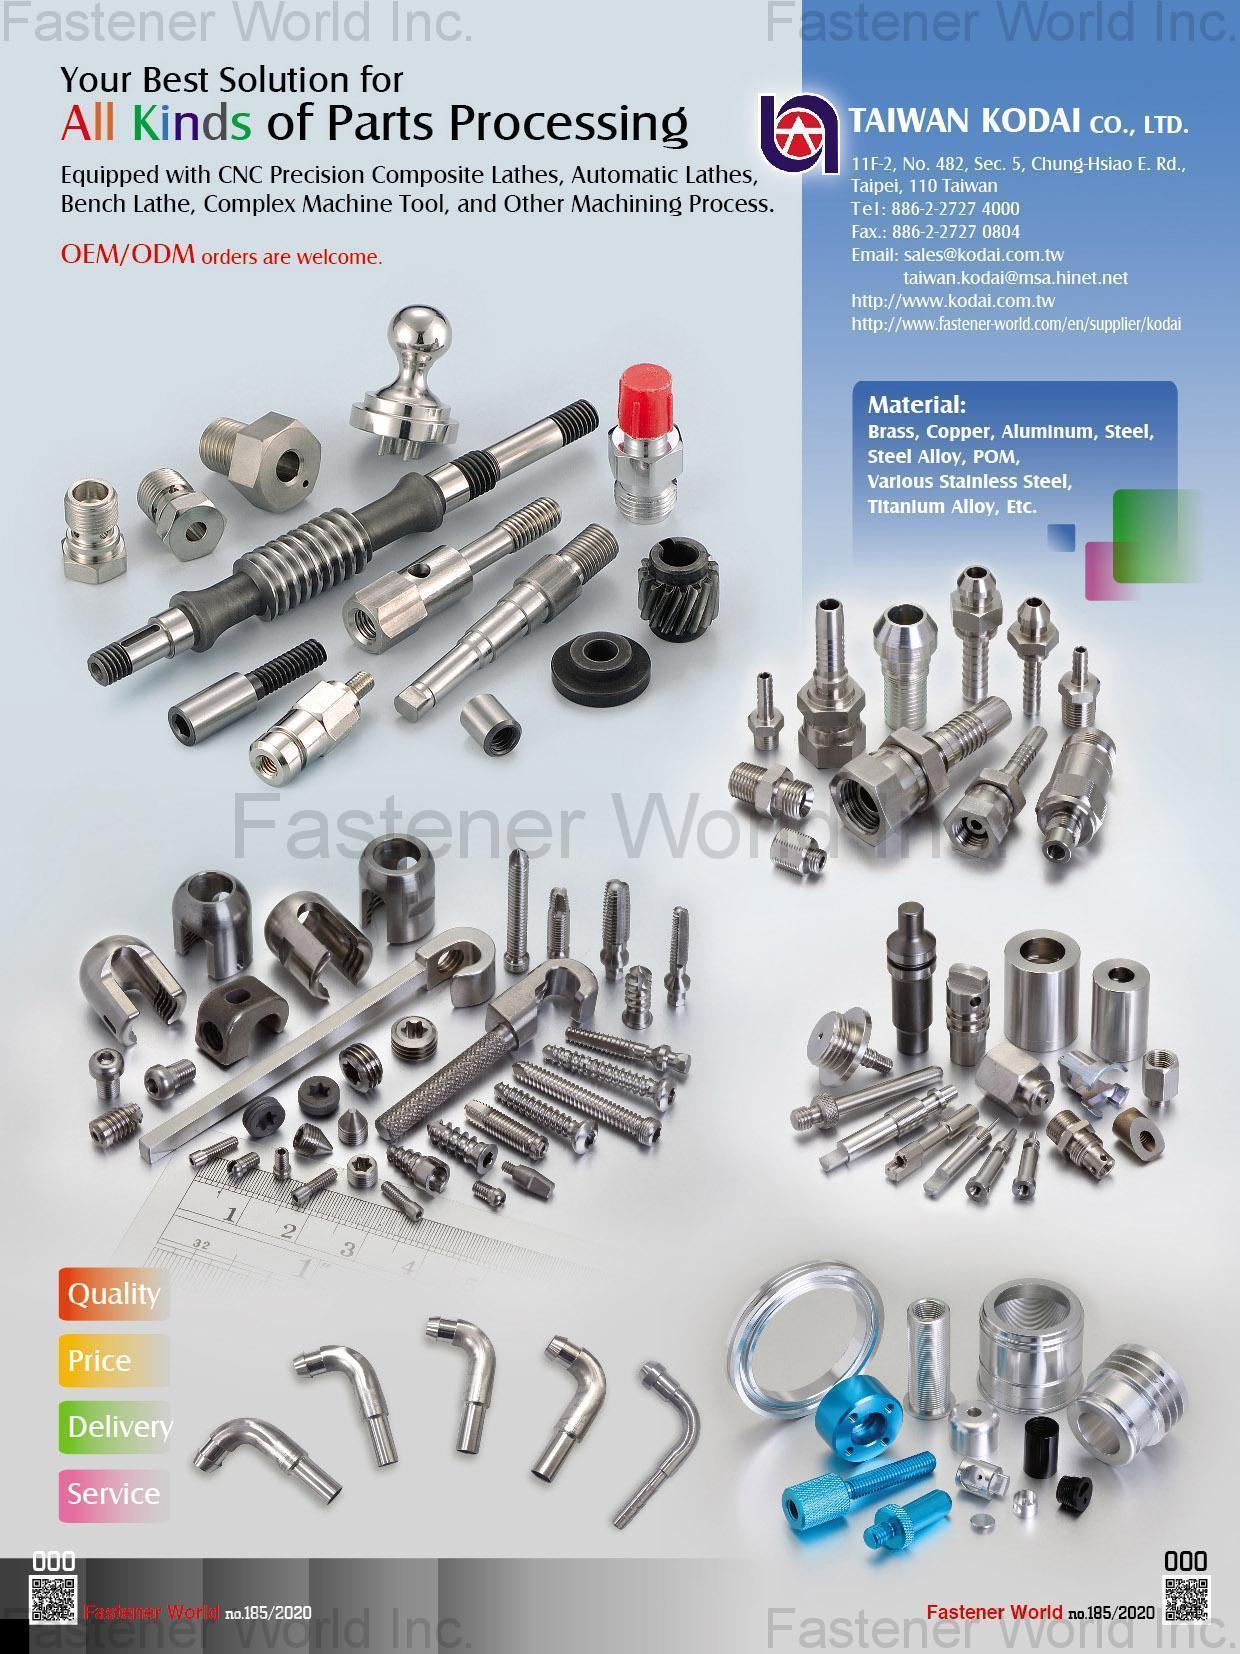 TAIWAN KODAI CO., LTD. , CNC Precision Composite Lathes, Automatic Lathes, Bench Lathe, Complex Machine Tool, Other Machining Process